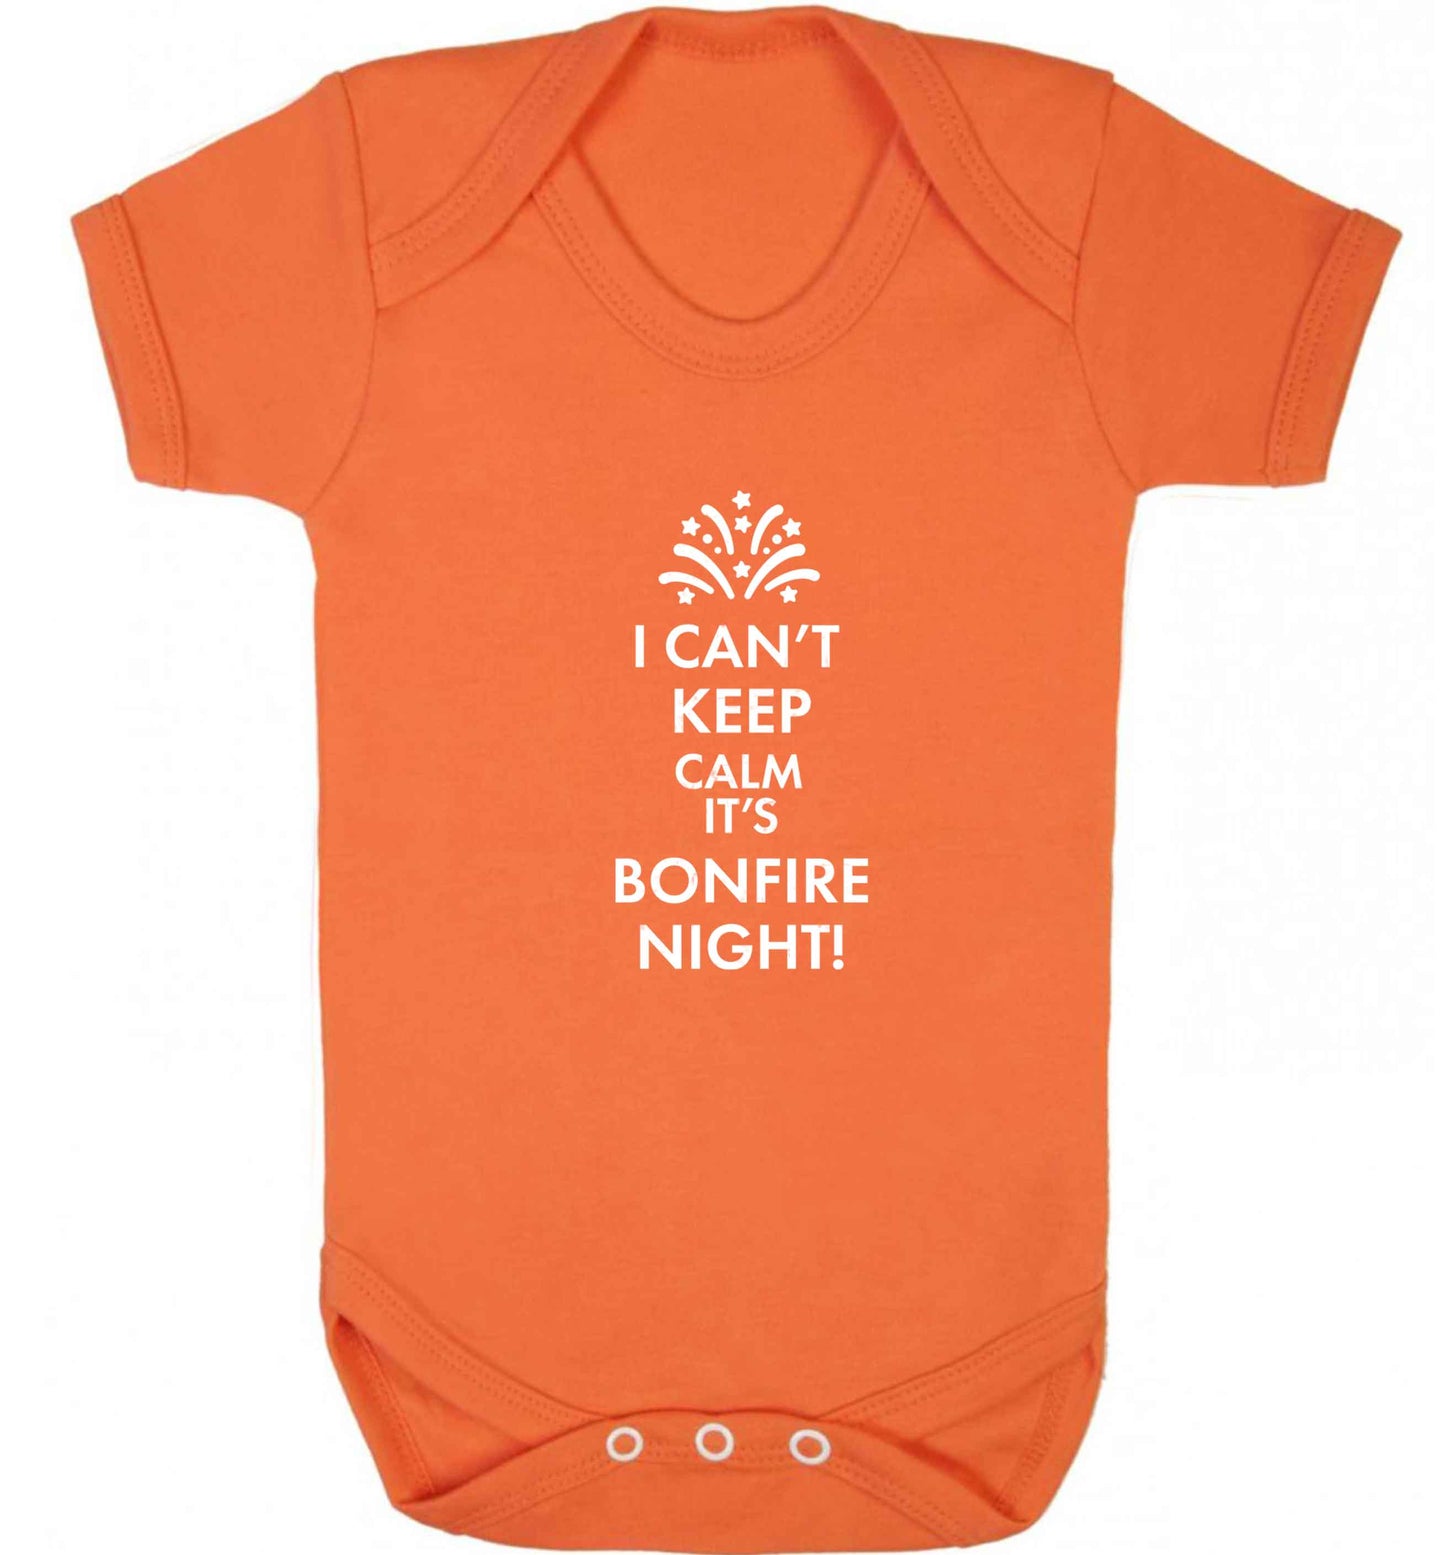 I can't keep calm its bonfire night baby vest orange 18-24 months